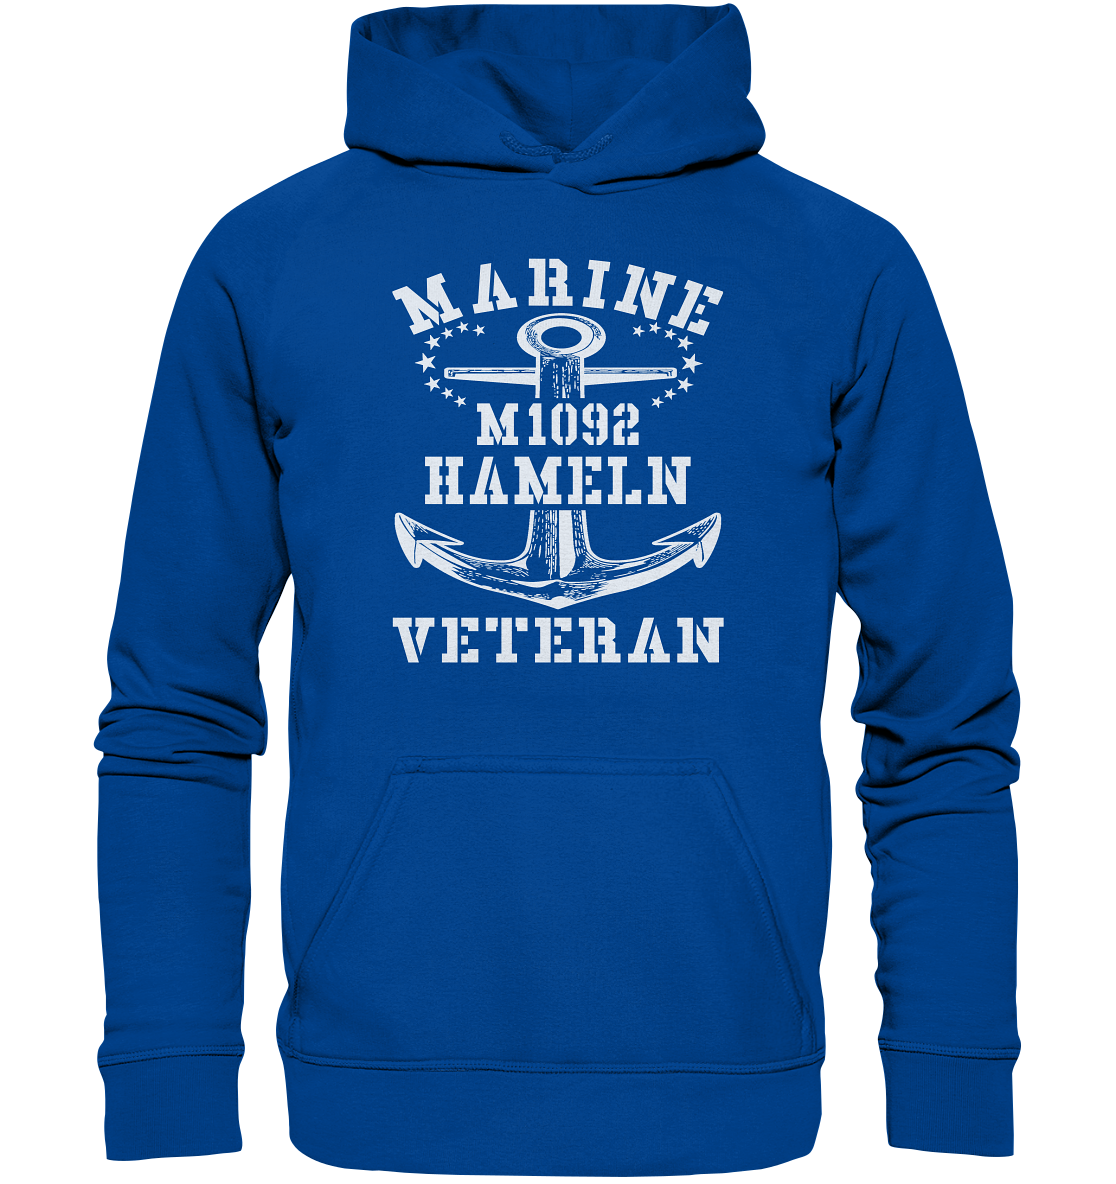 M1092 HAMELN Marine Veteran - Basic Unisex Hoodie